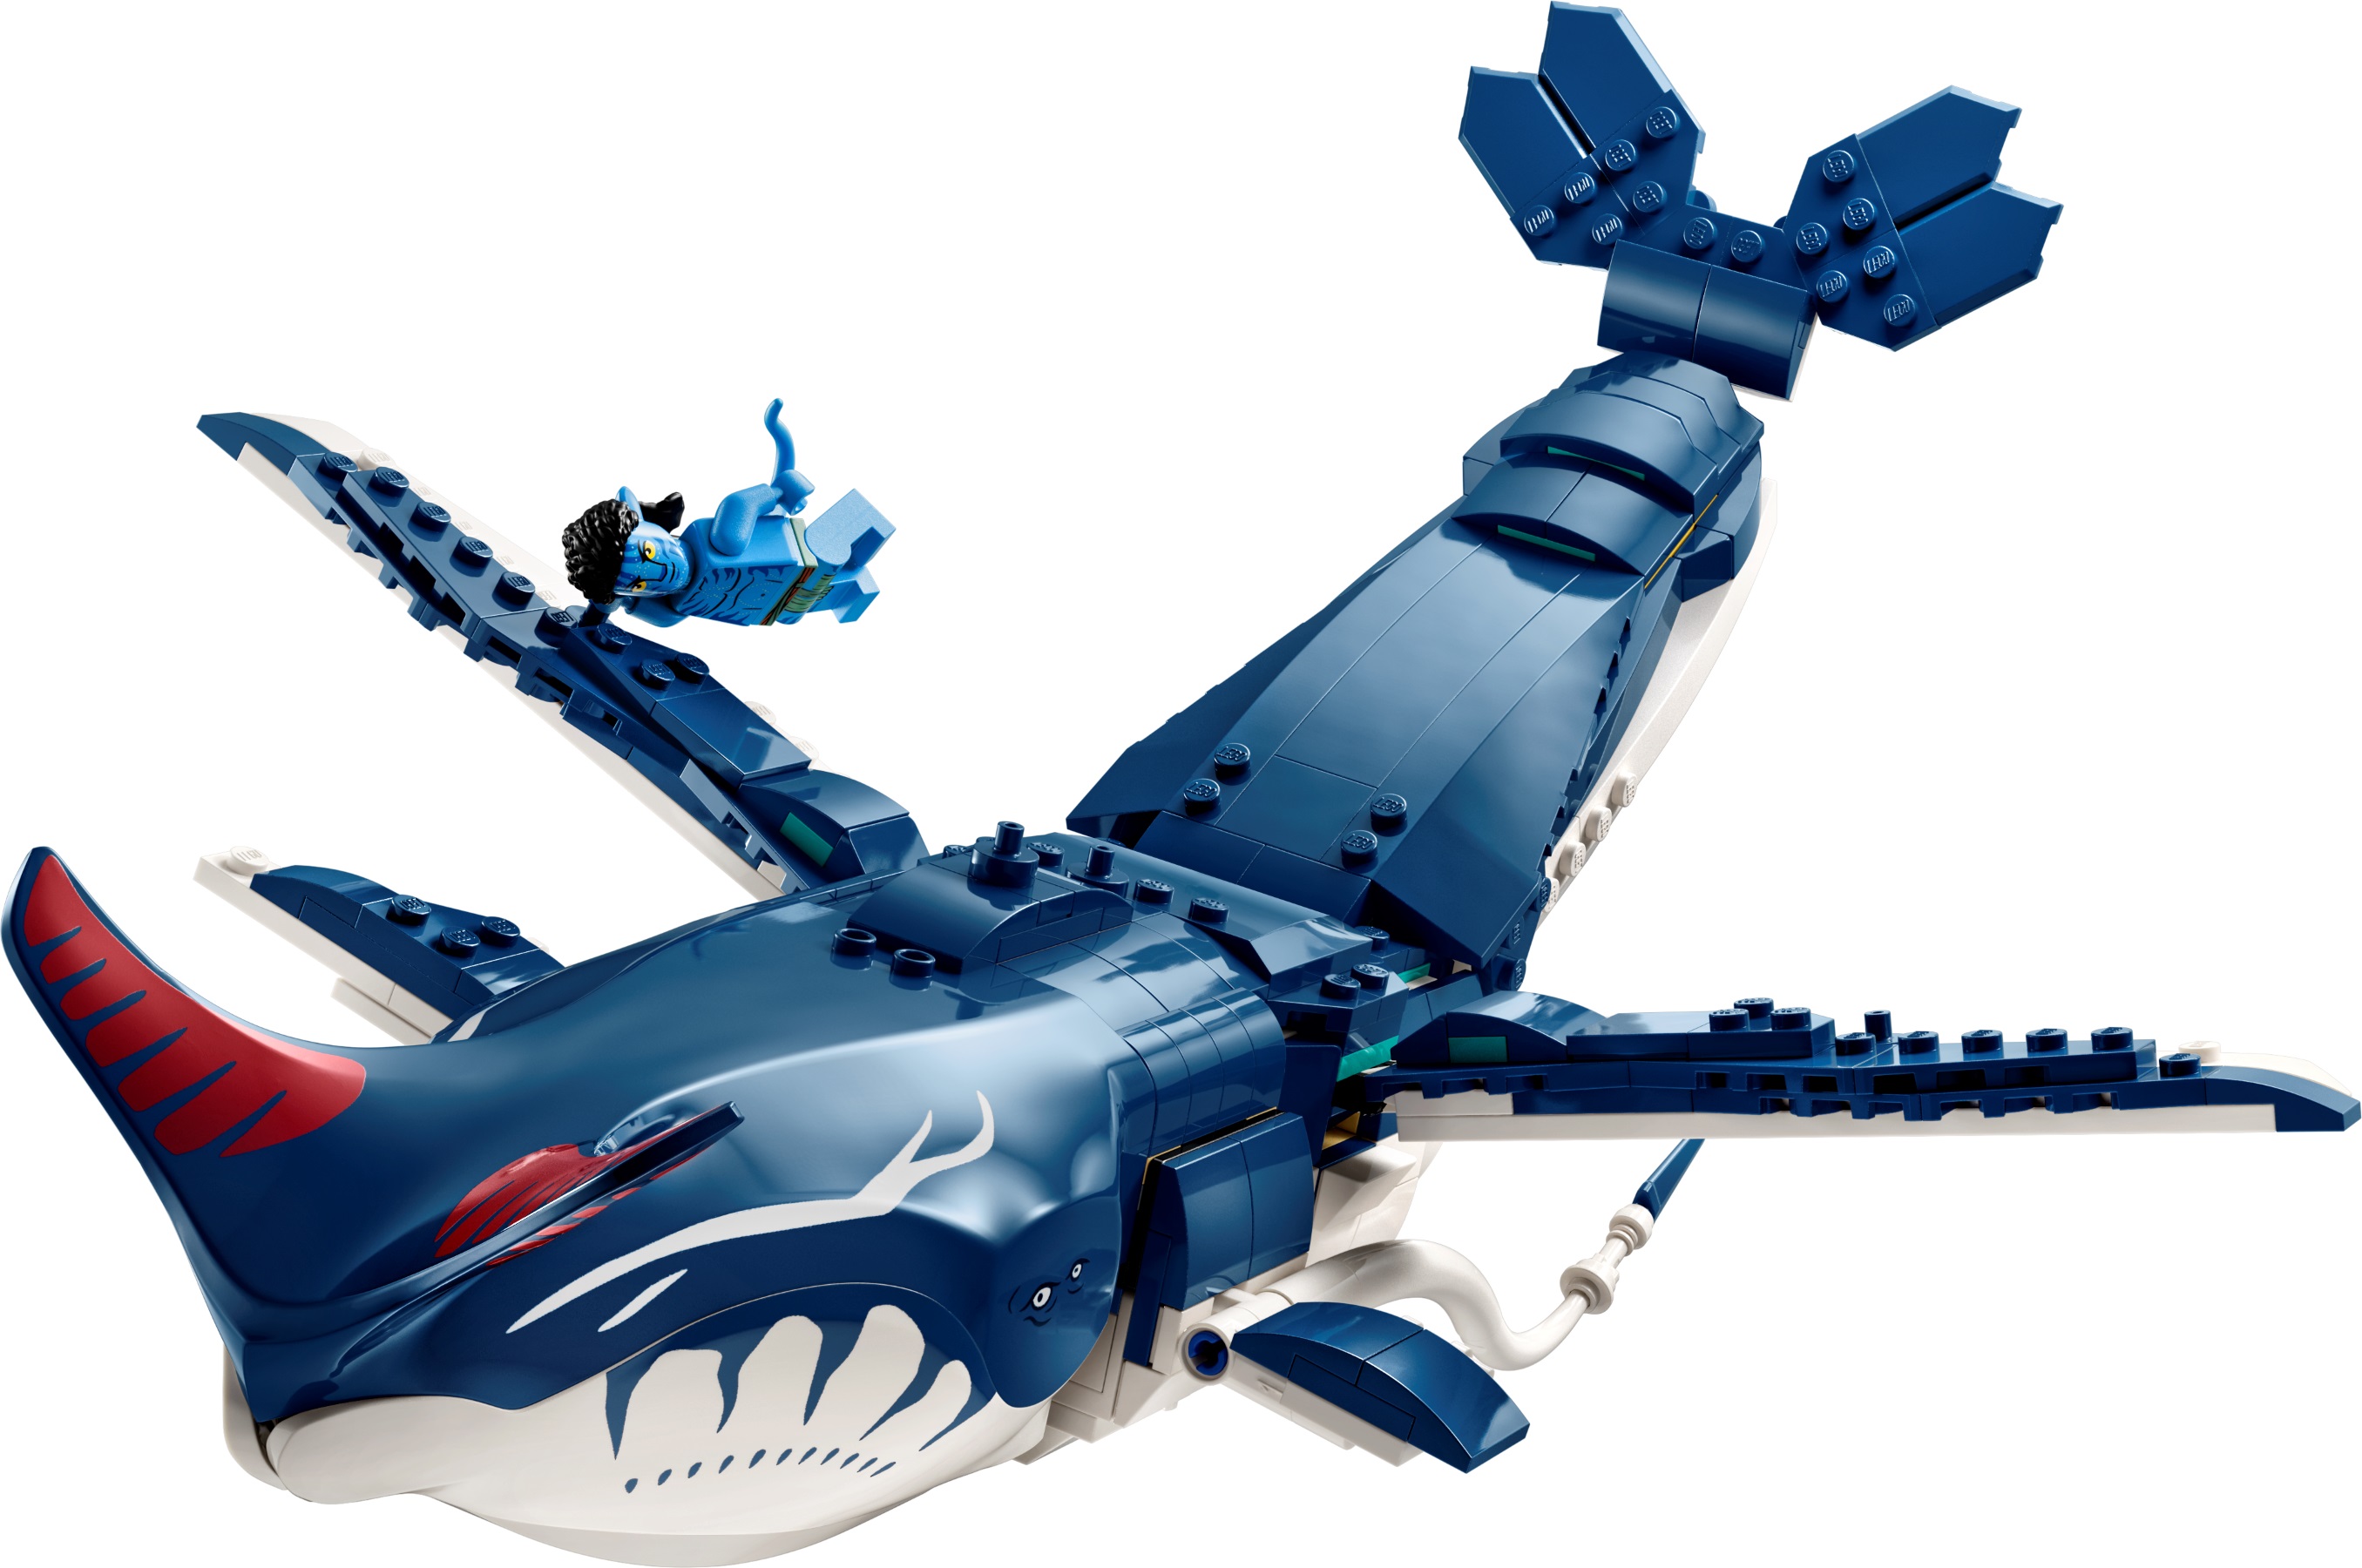 New LEGO Avatar Way of the Water 2023 sets revealed! - Jay's Brick Blog